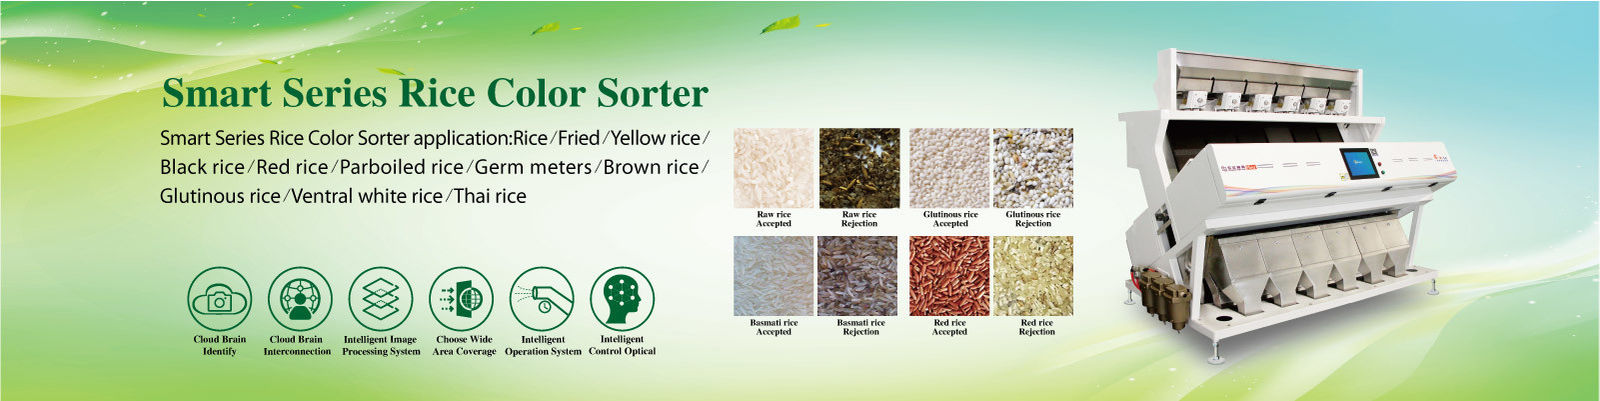 Rice Color Sorter